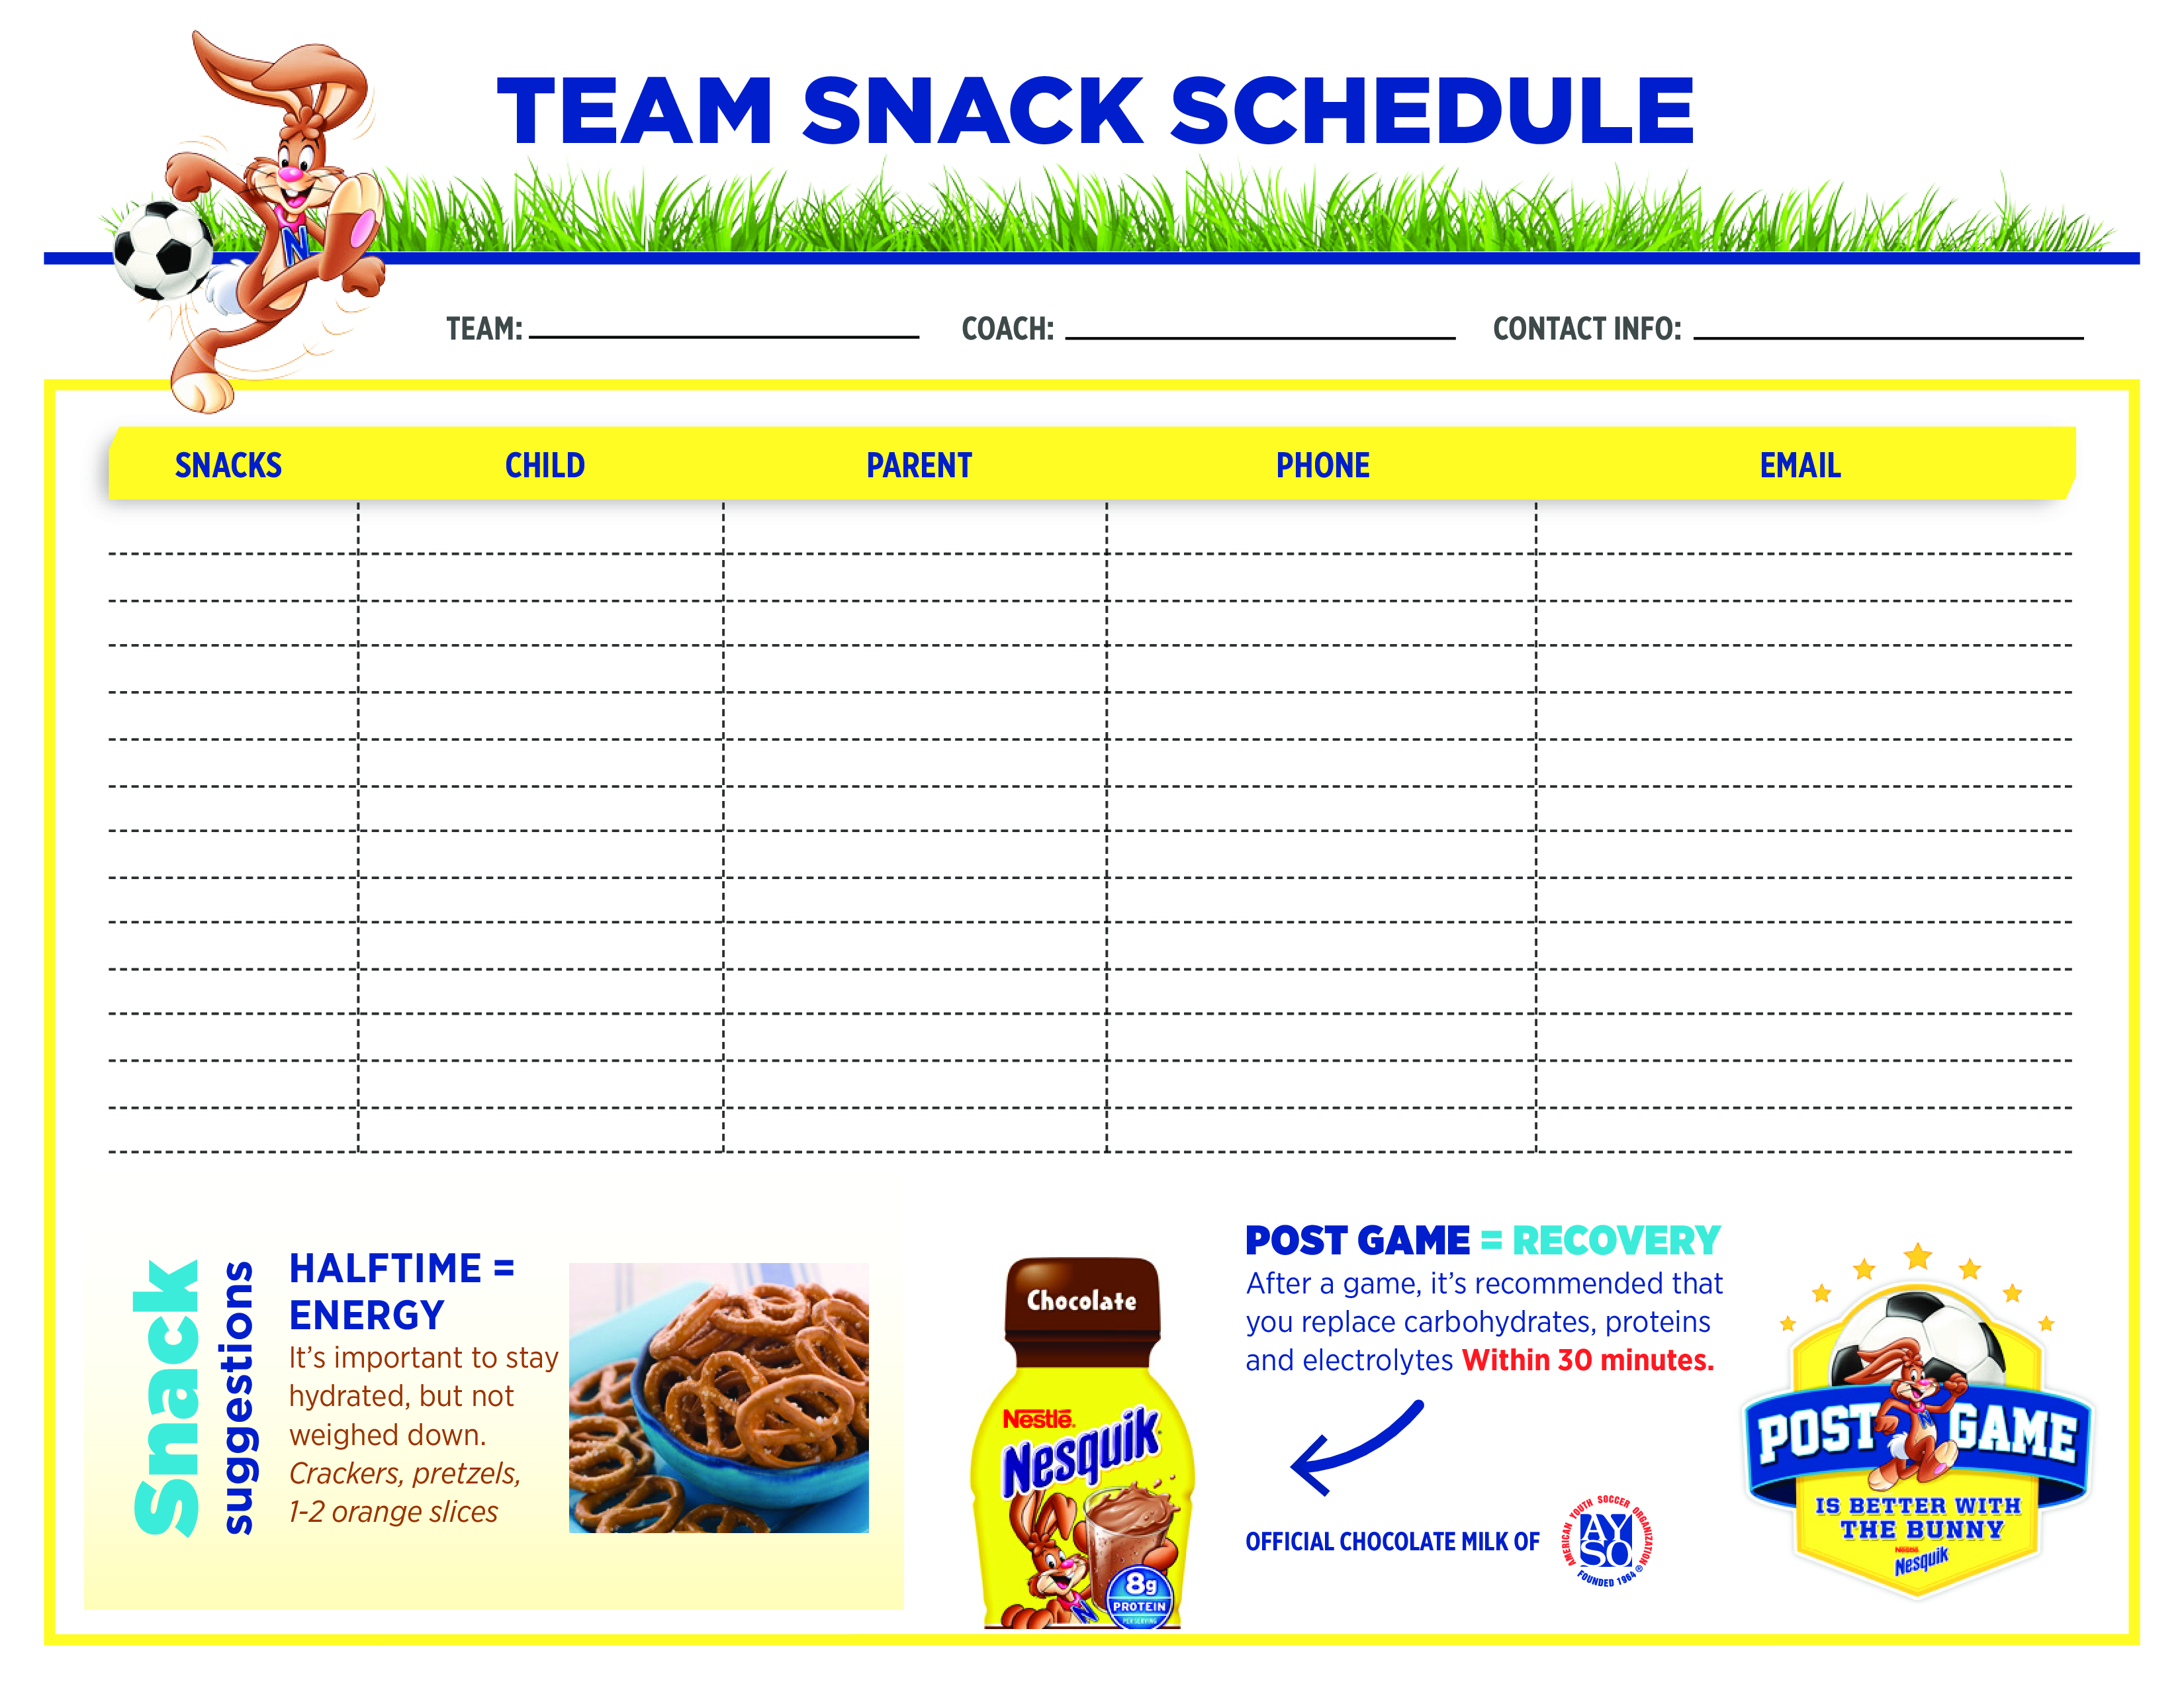 Team Snack Schedule Templates At Allbusinesstemplates